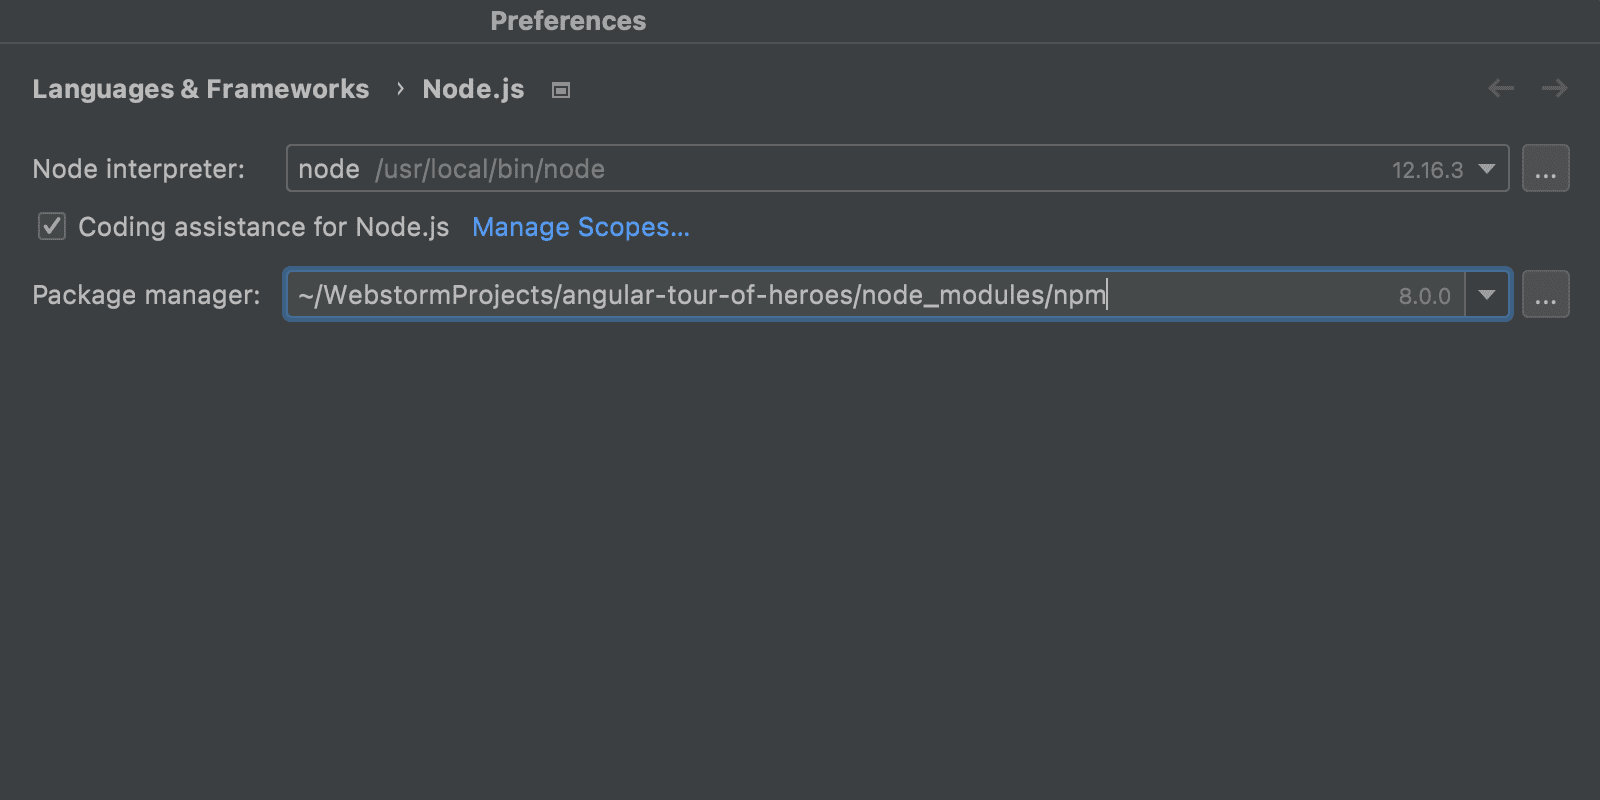 node-js-section-in-preferences